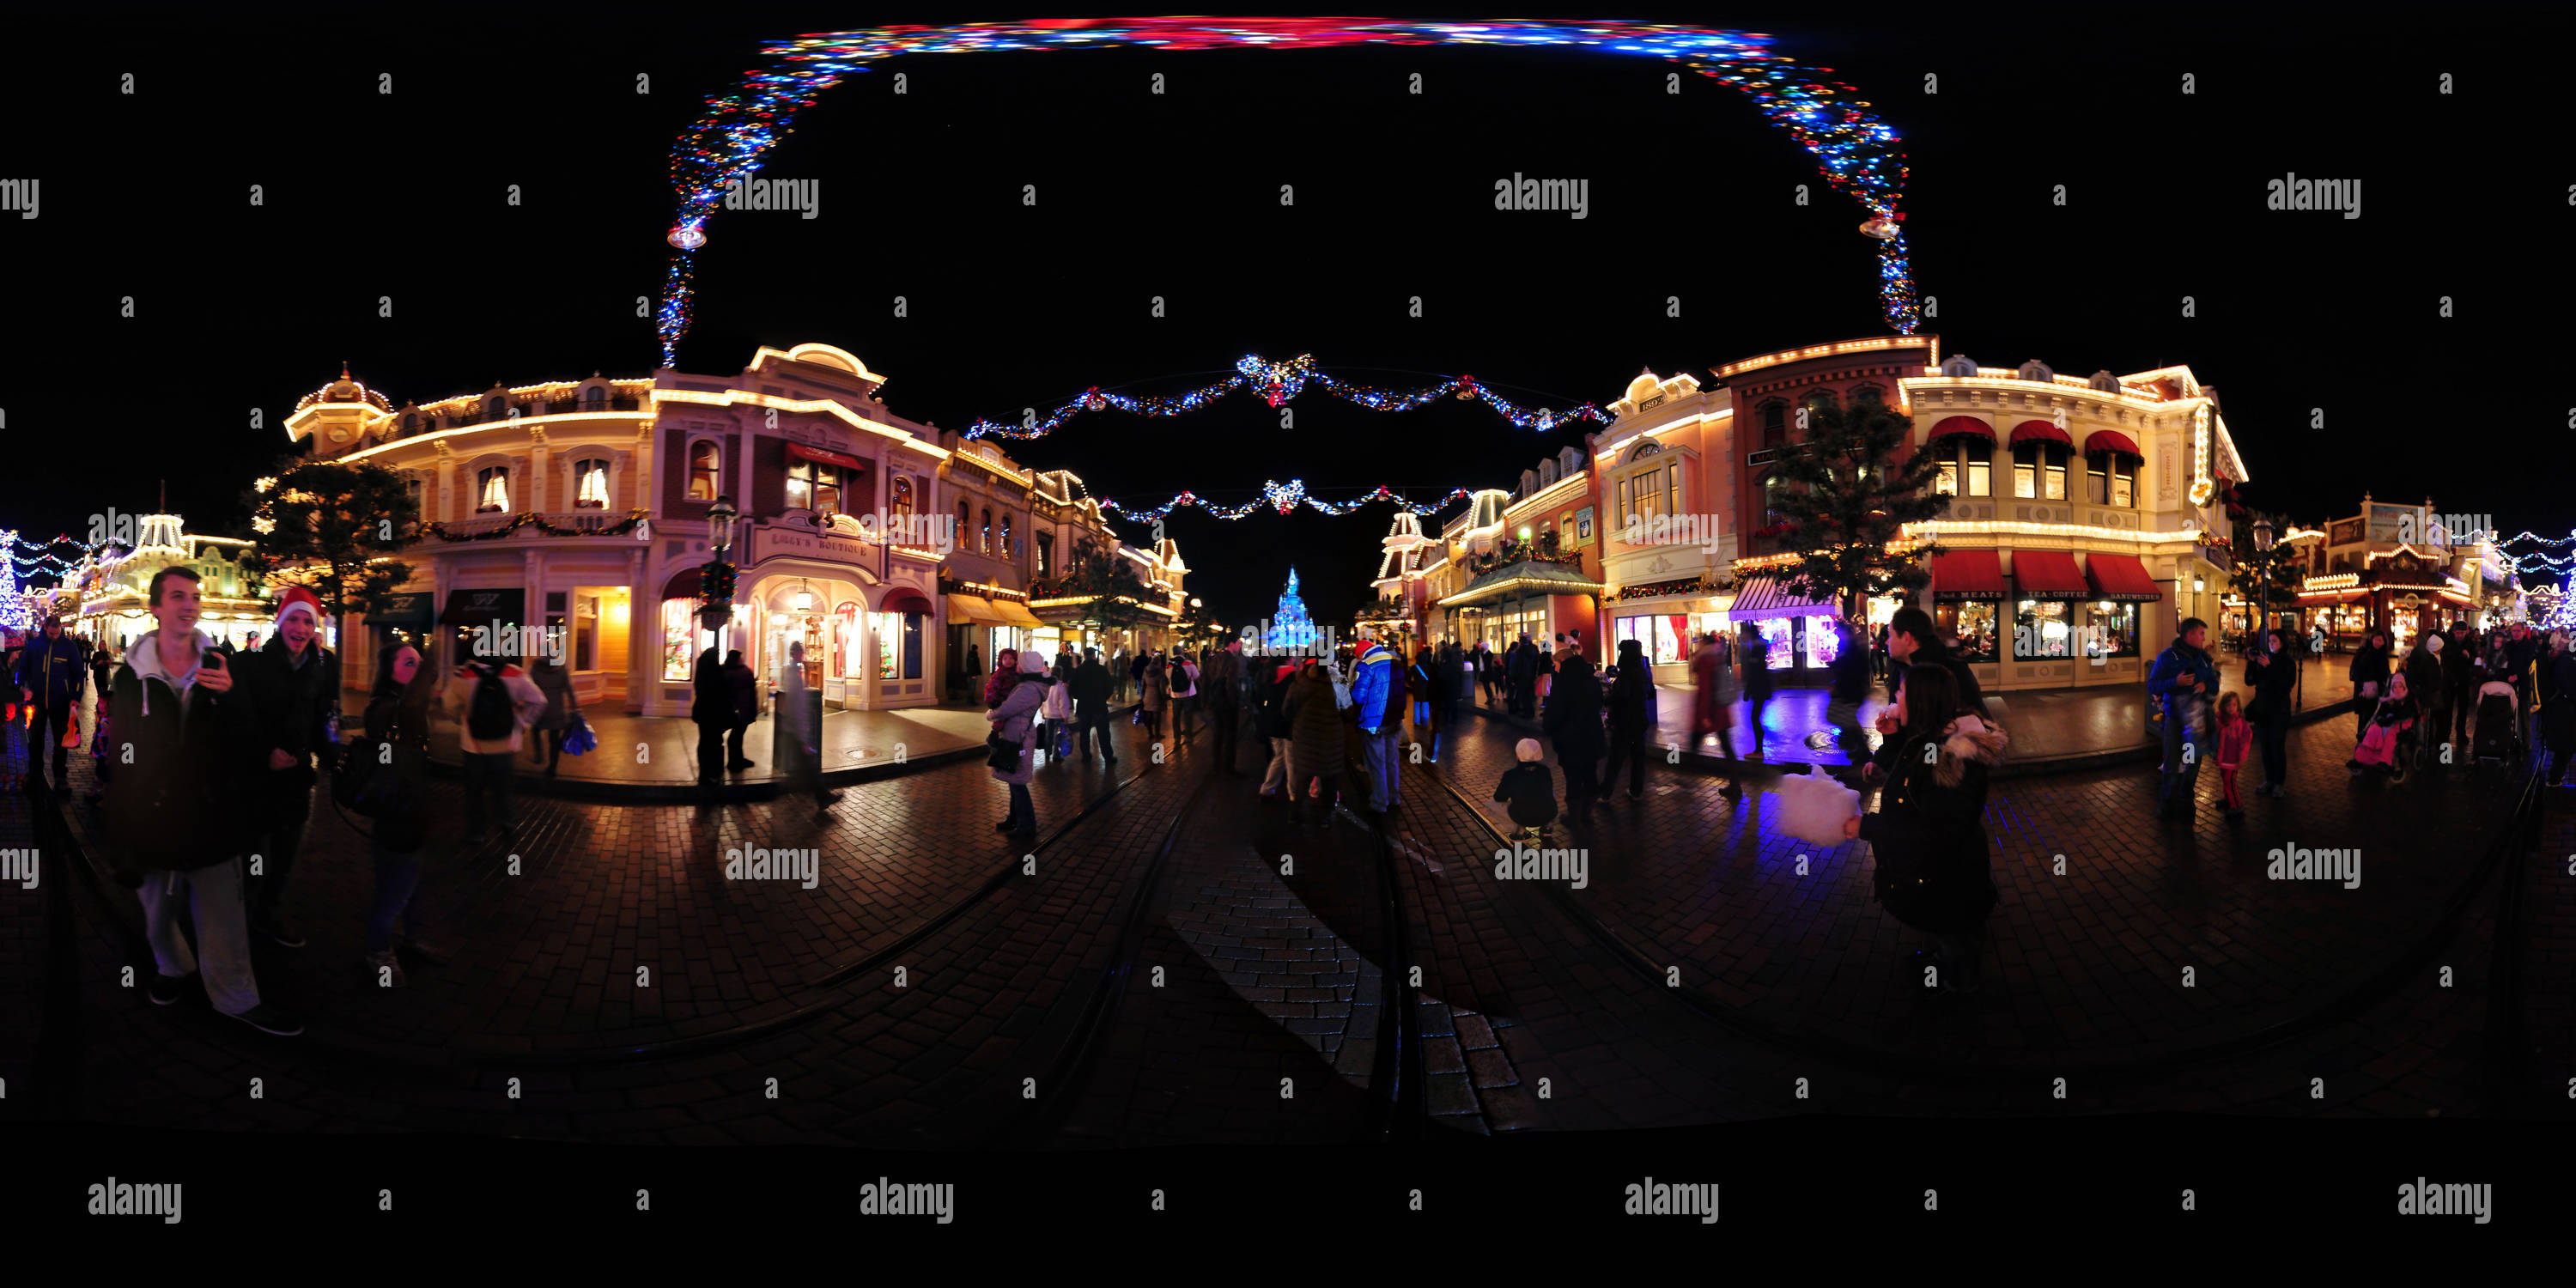 360 degree panoramic view of Main Street, Disneyland Paris